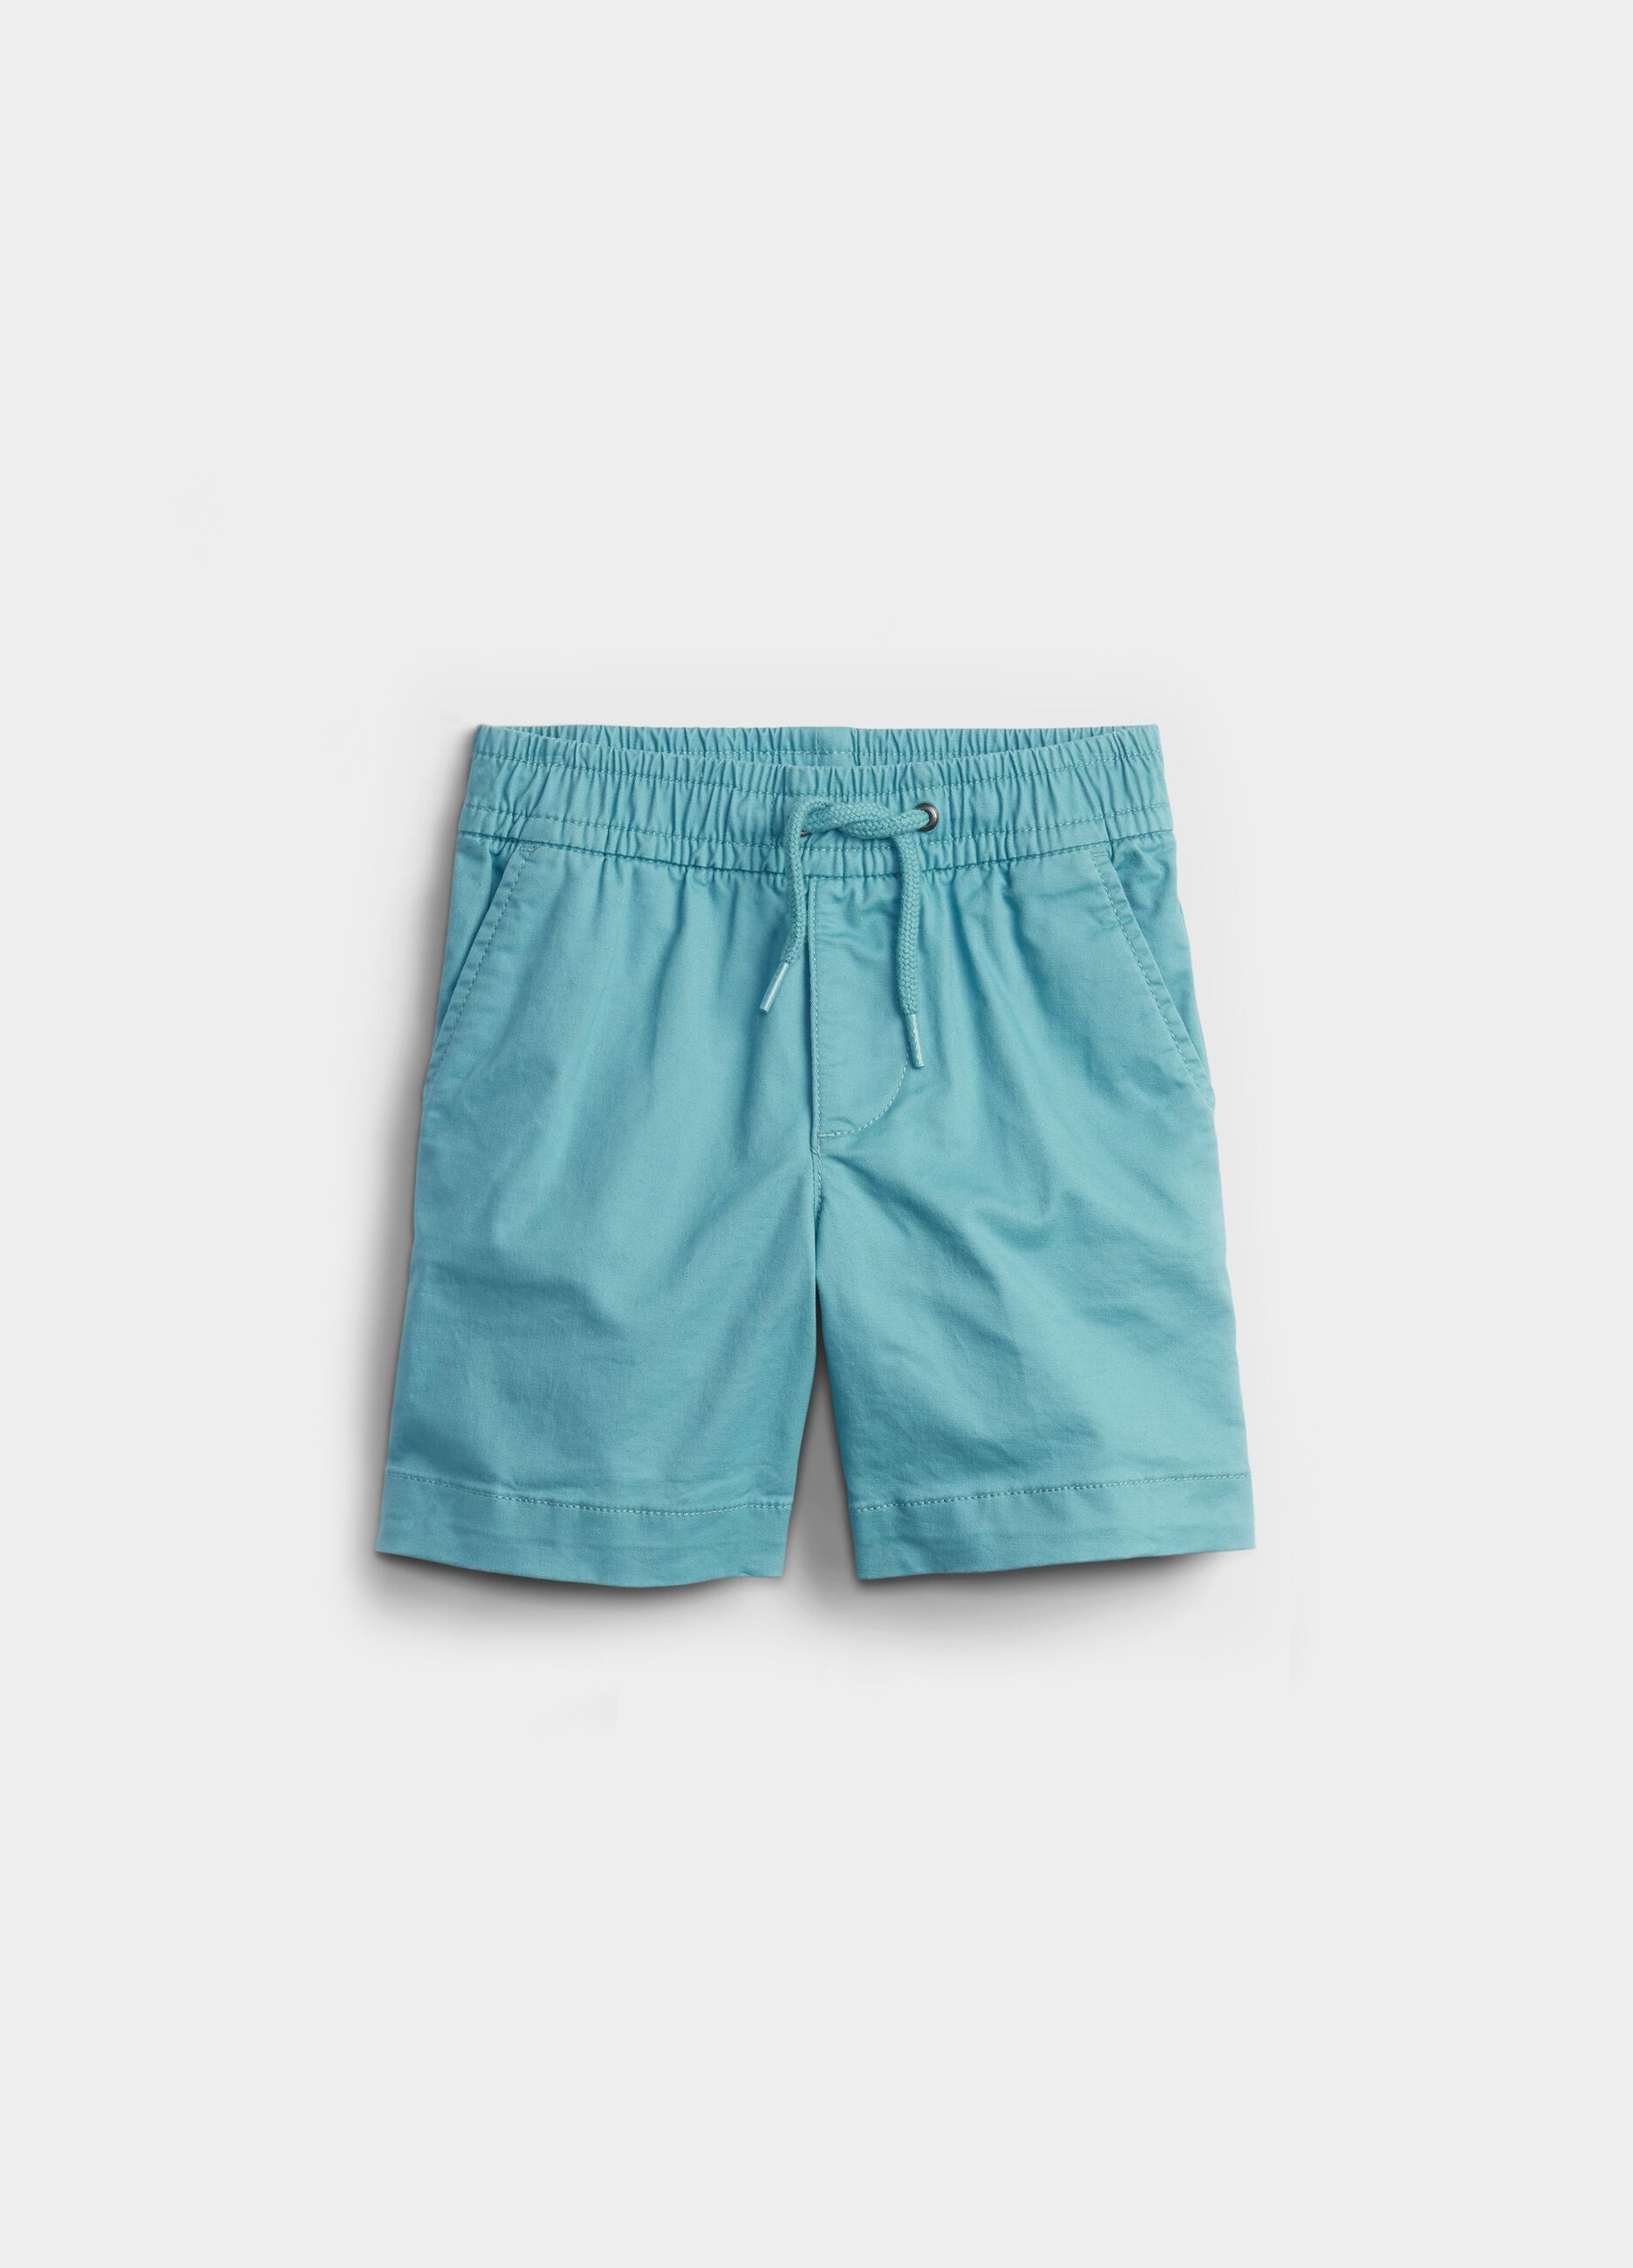 Stretch cotton Bermuda shorts